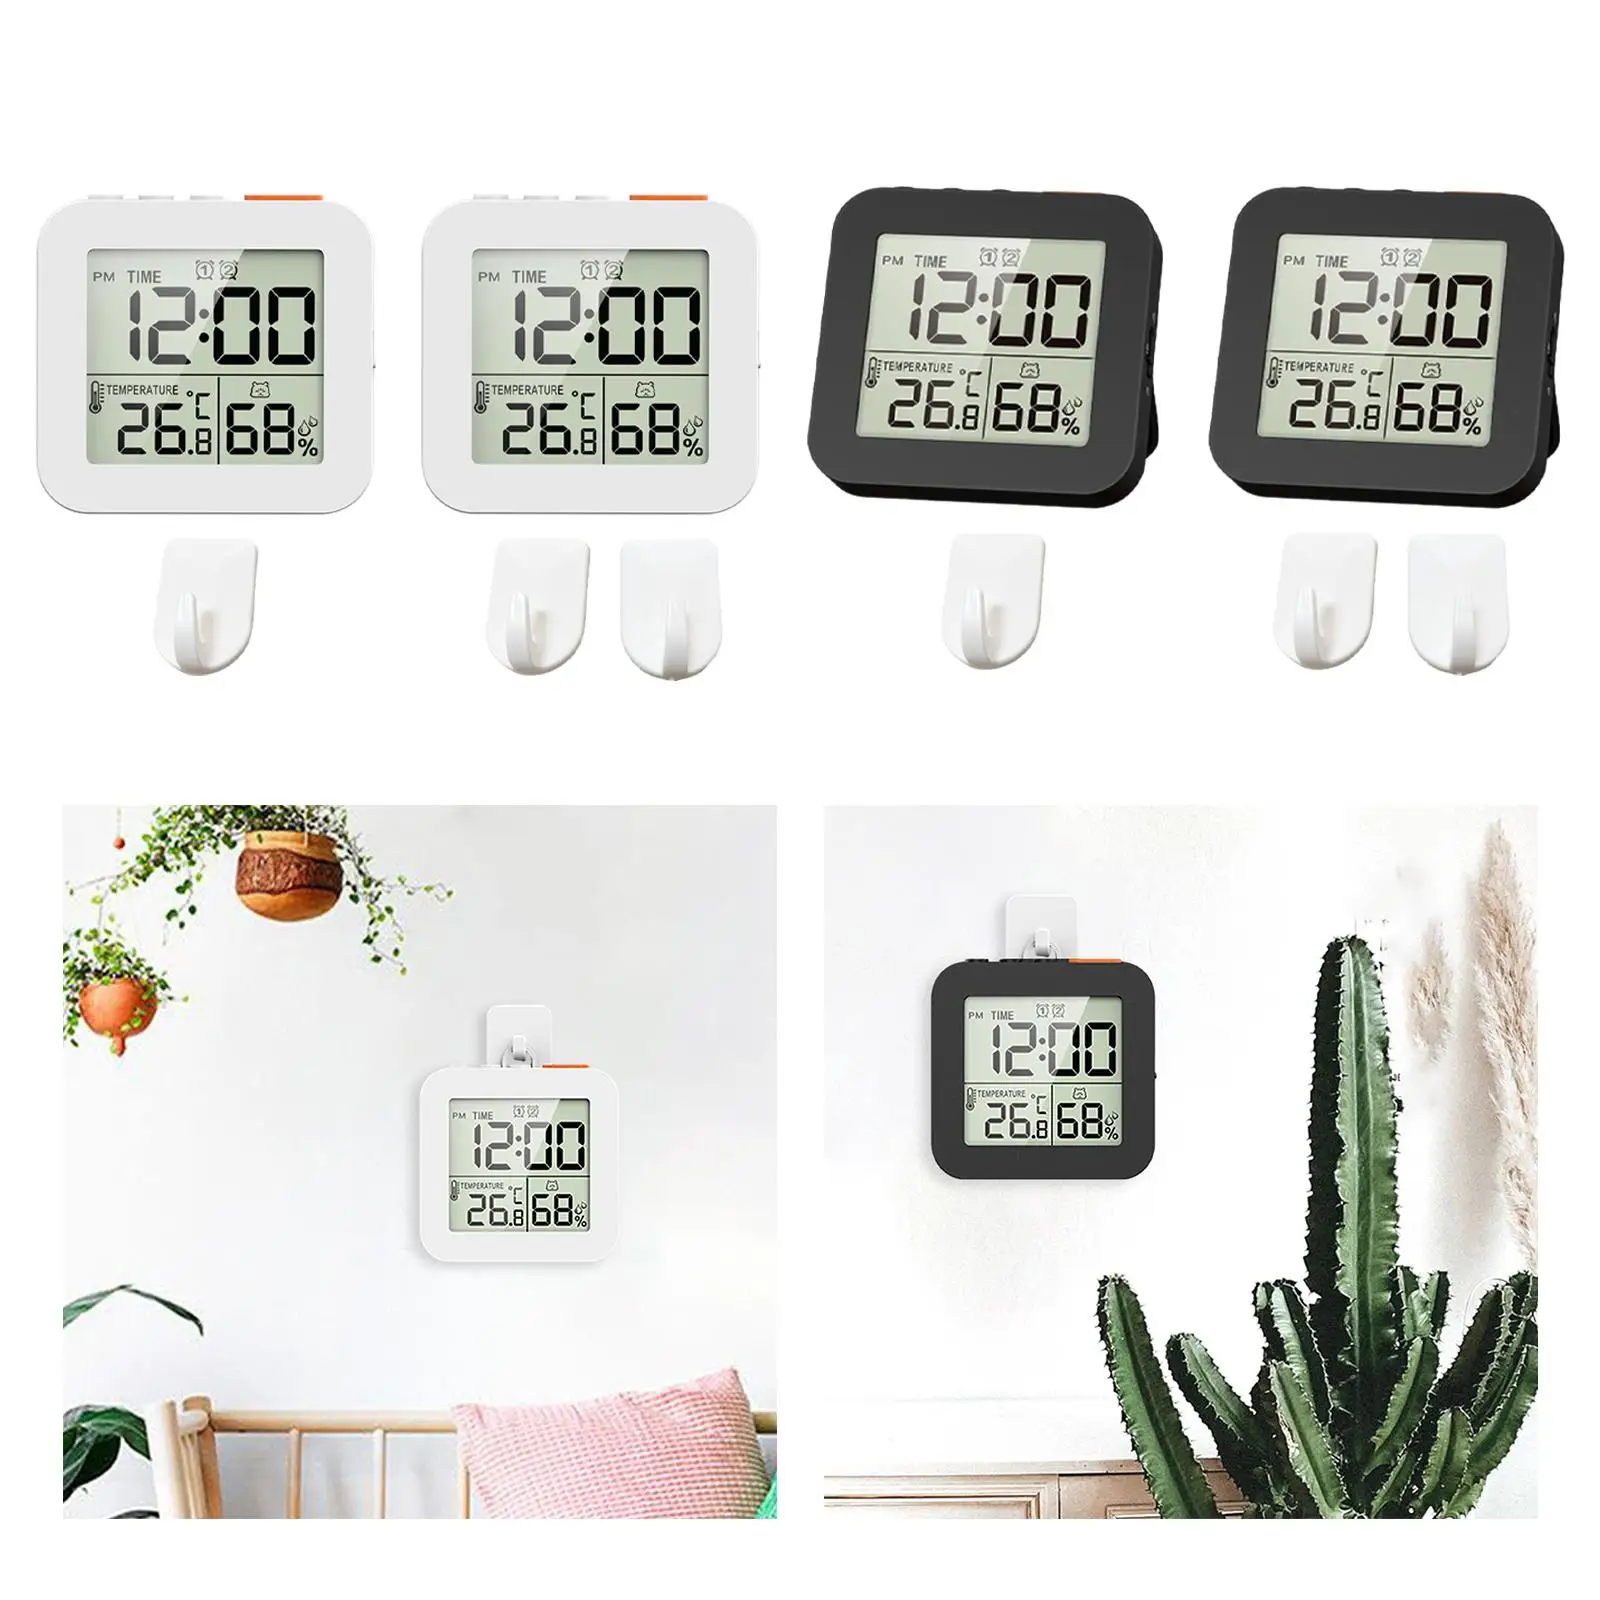 Digital Bathroom Clock Electronic LED Time Display Portable Digital Alarm Clock for Bedroom Study Room Living Room Indoor Home